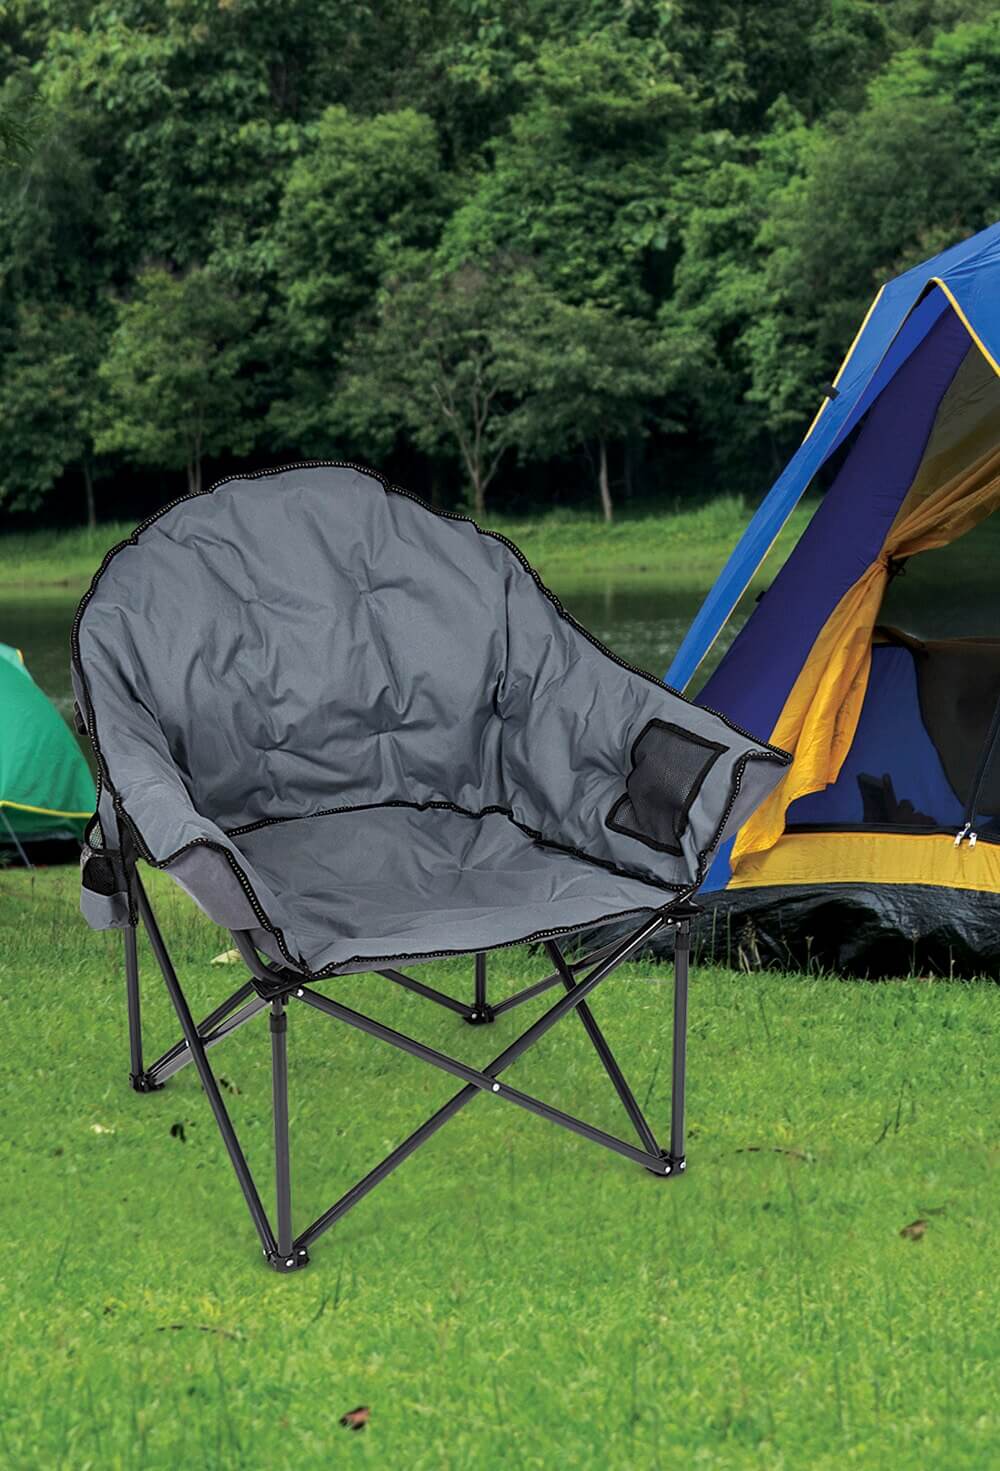 Folding Club Style Camp Chair